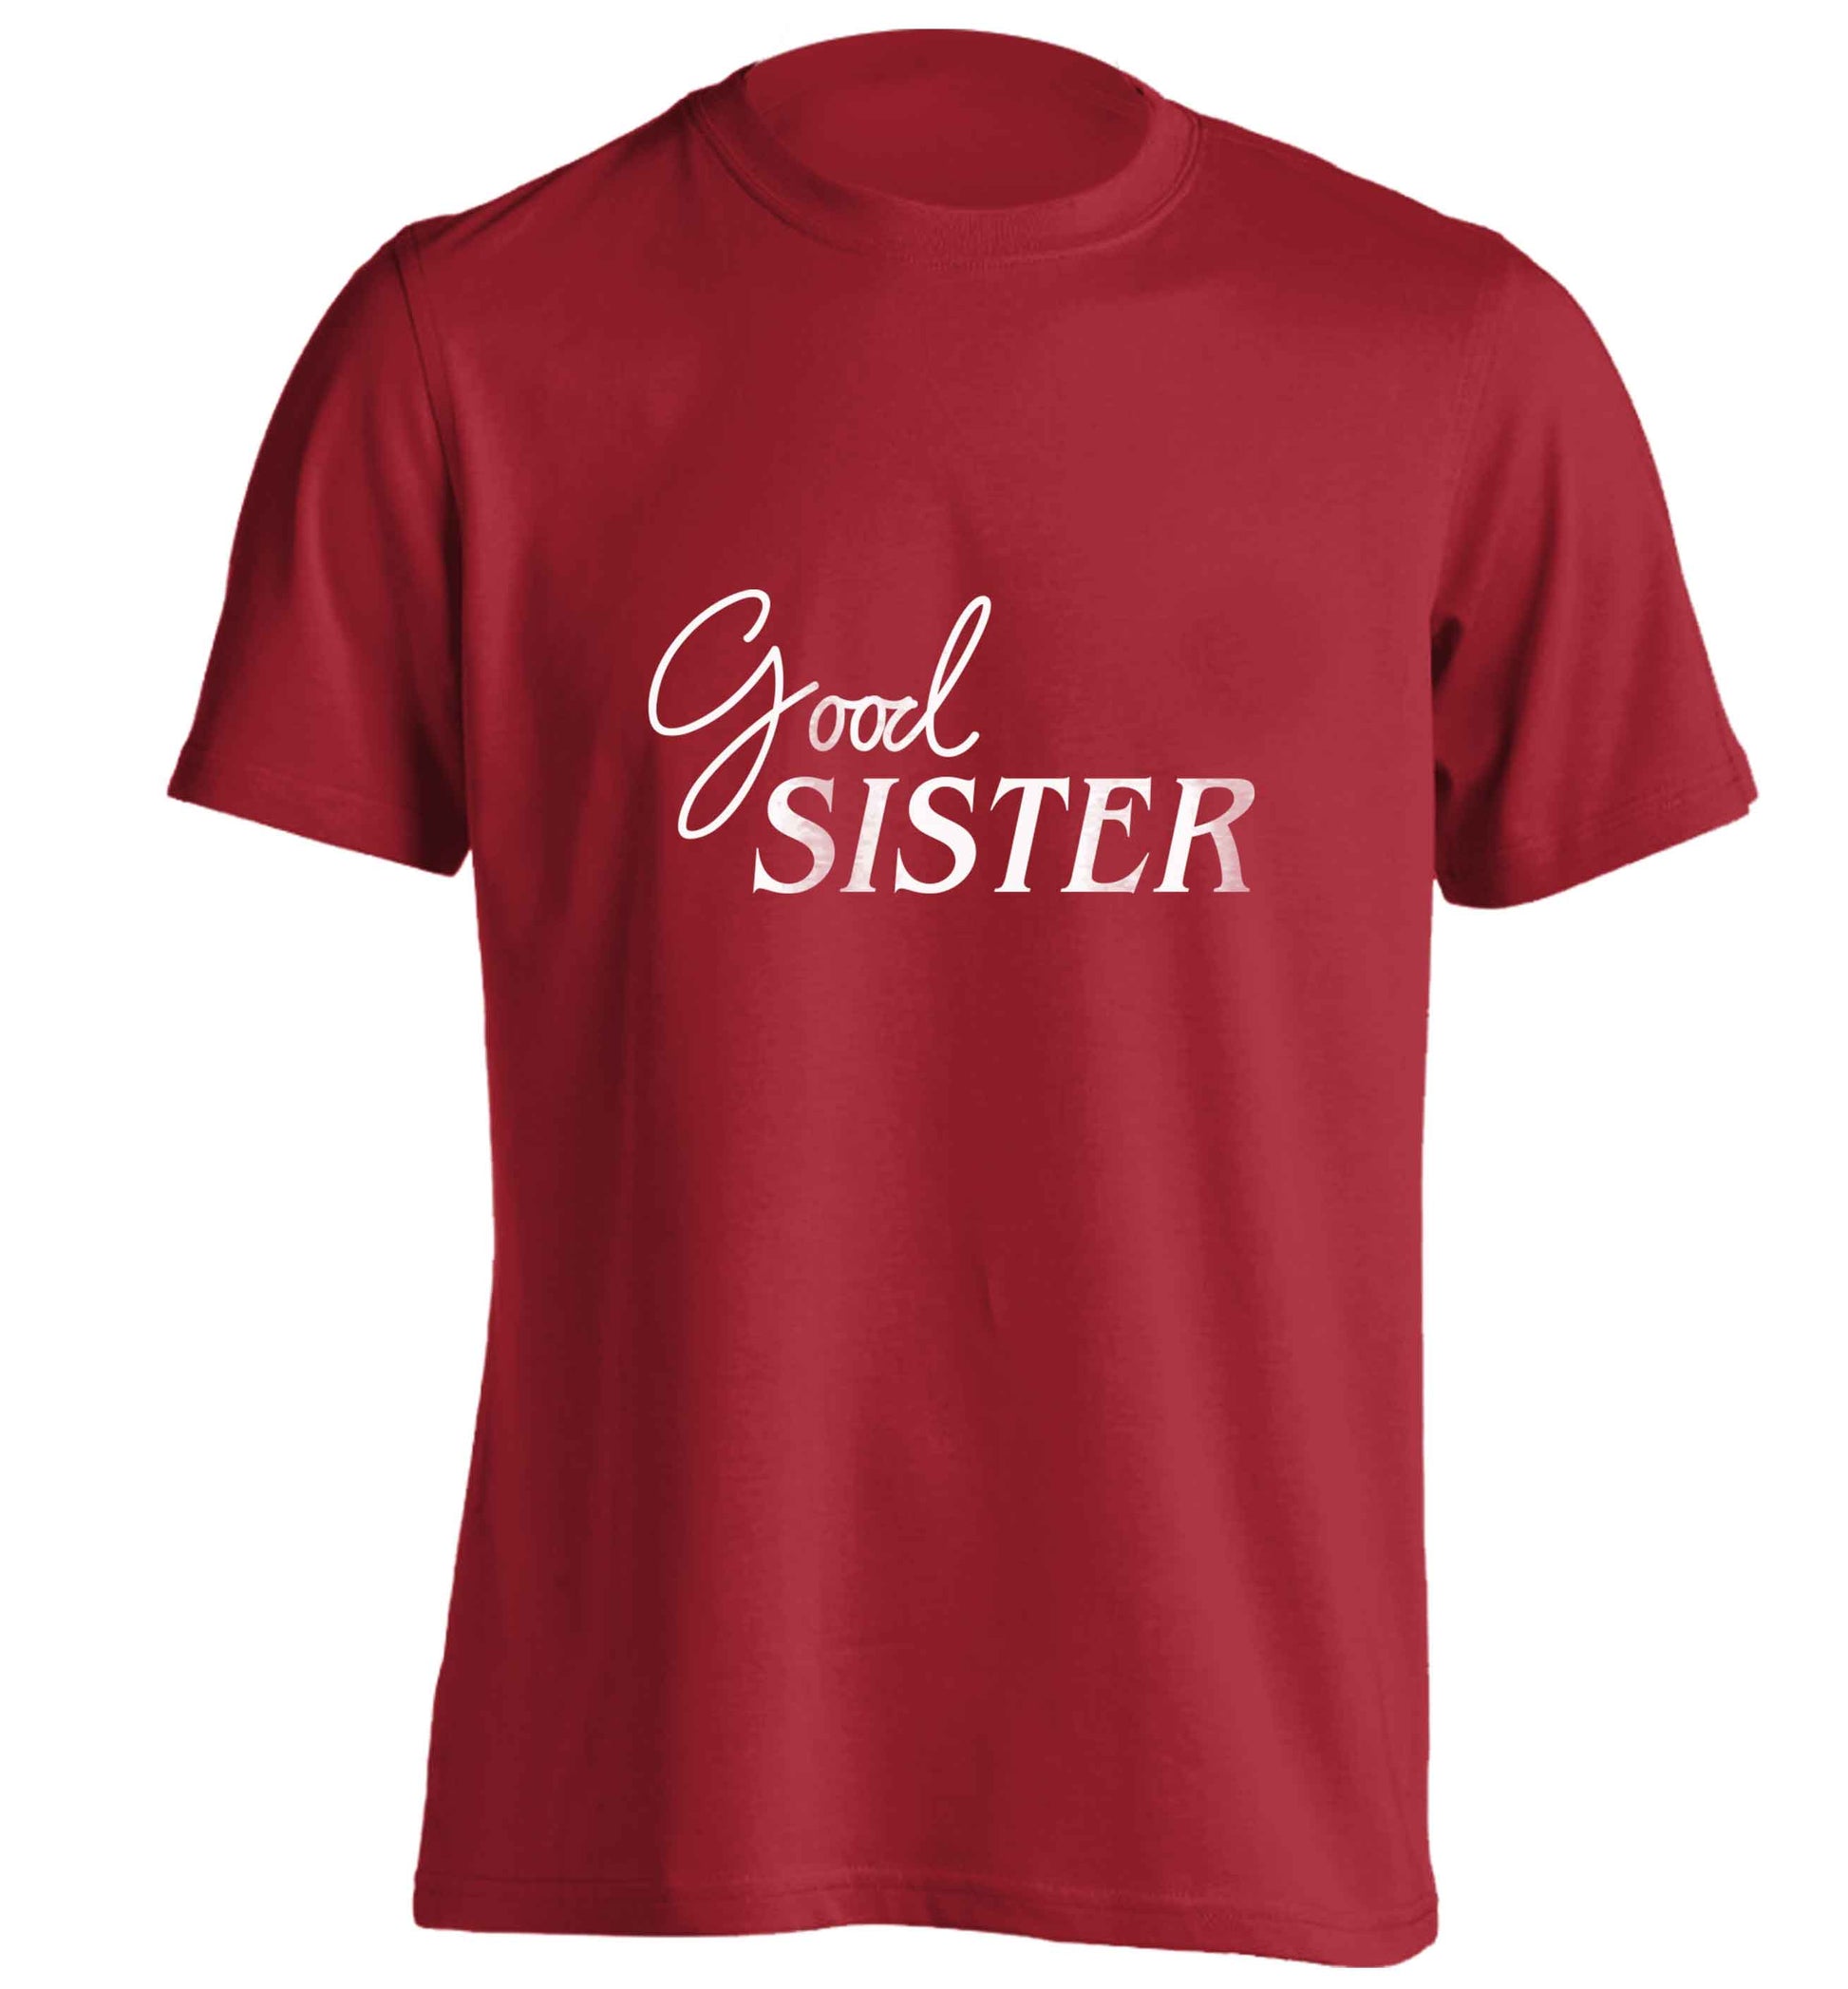 Good sister adults unisex red Tshirt 2XL